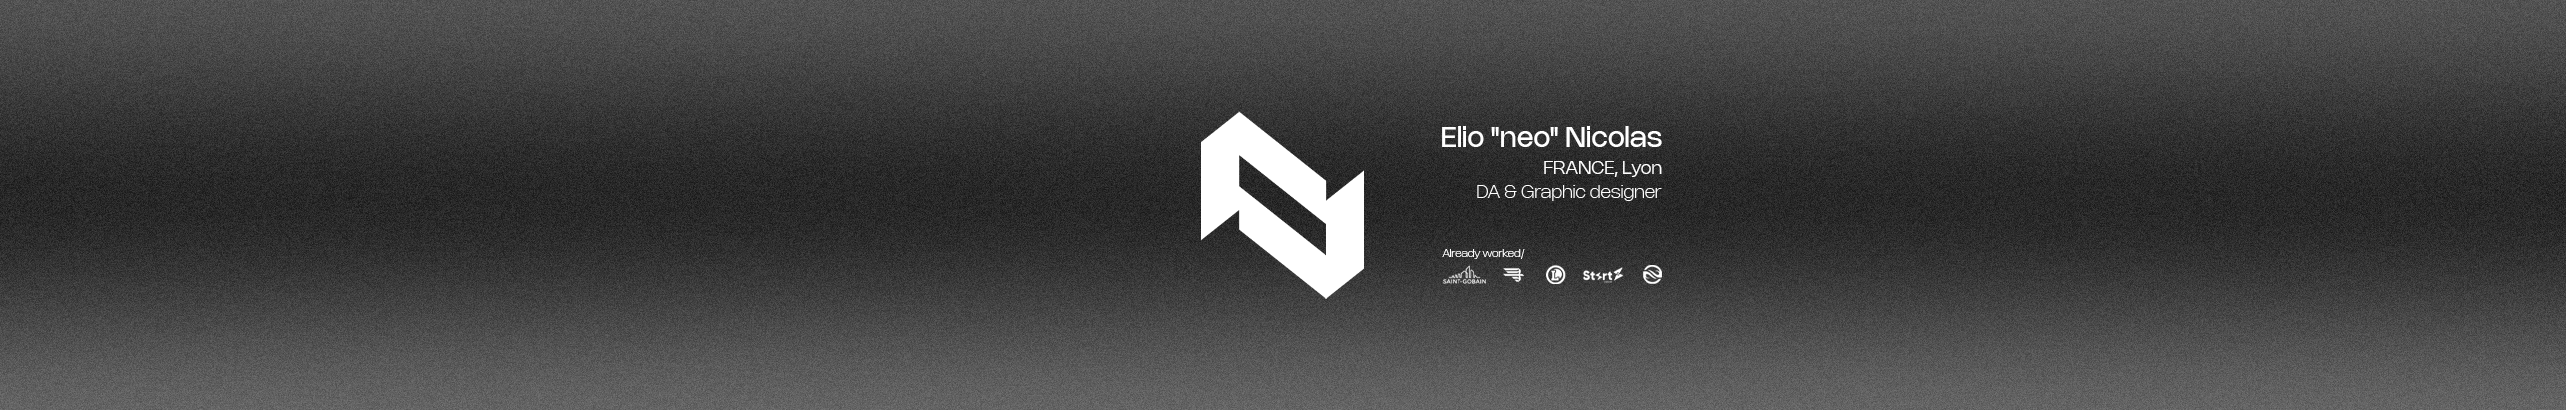 Bannière de profil de Elio Nicolas